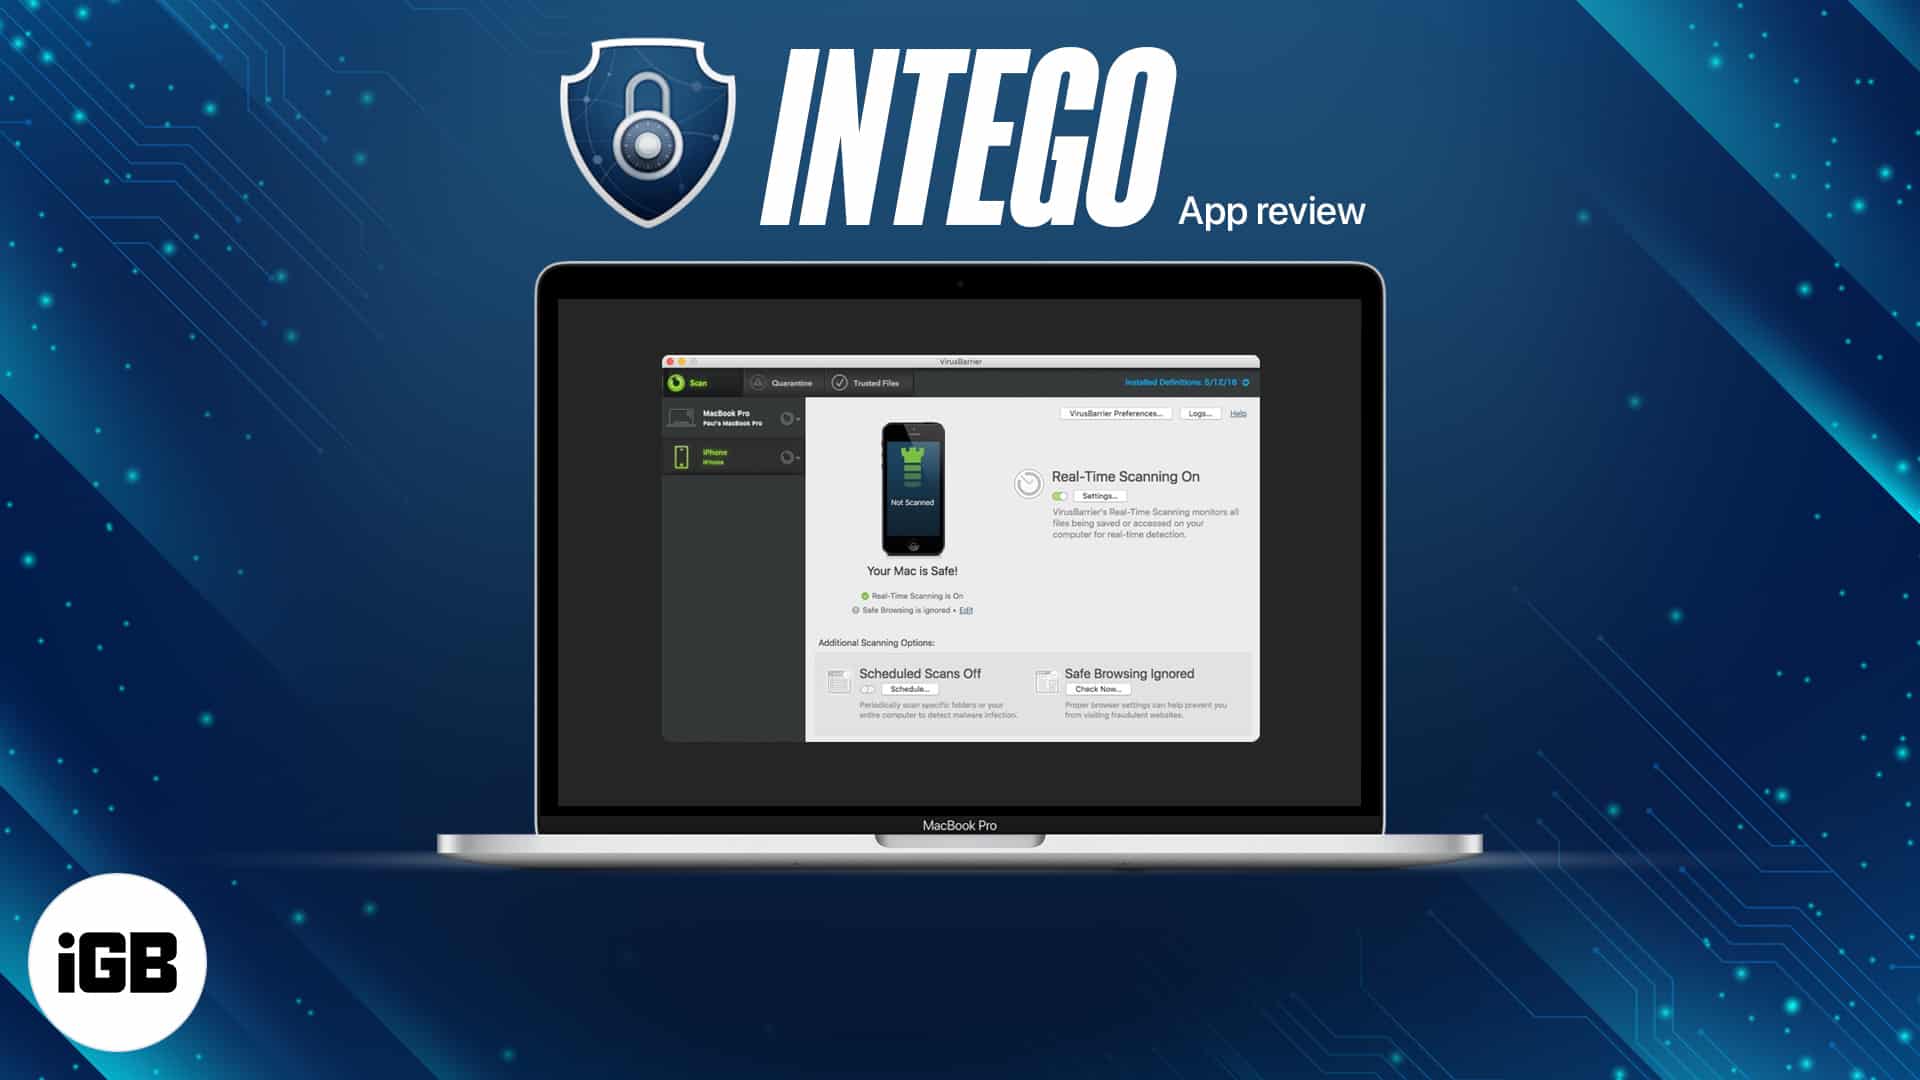 intego virusbarrier scanner review